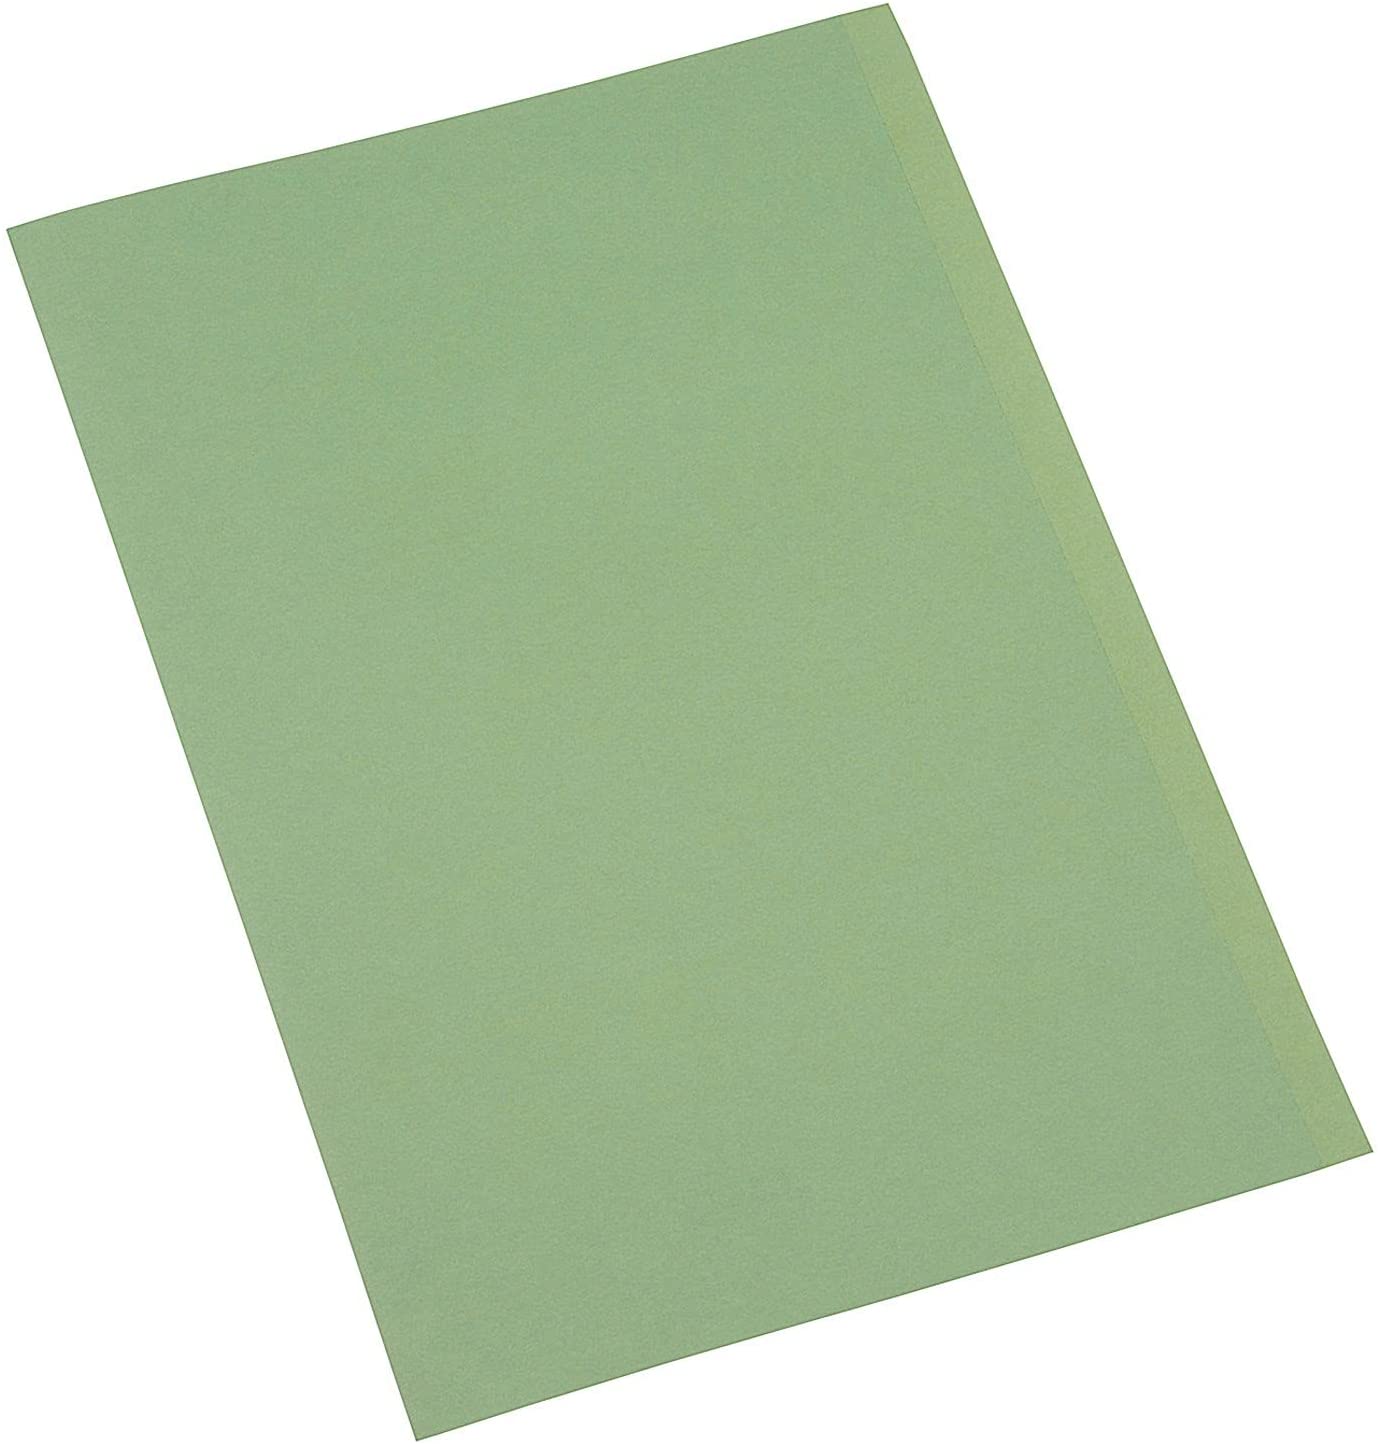 Square Cut Folder Mediumweight 250gsm Foolscap Green (Pack of 100)